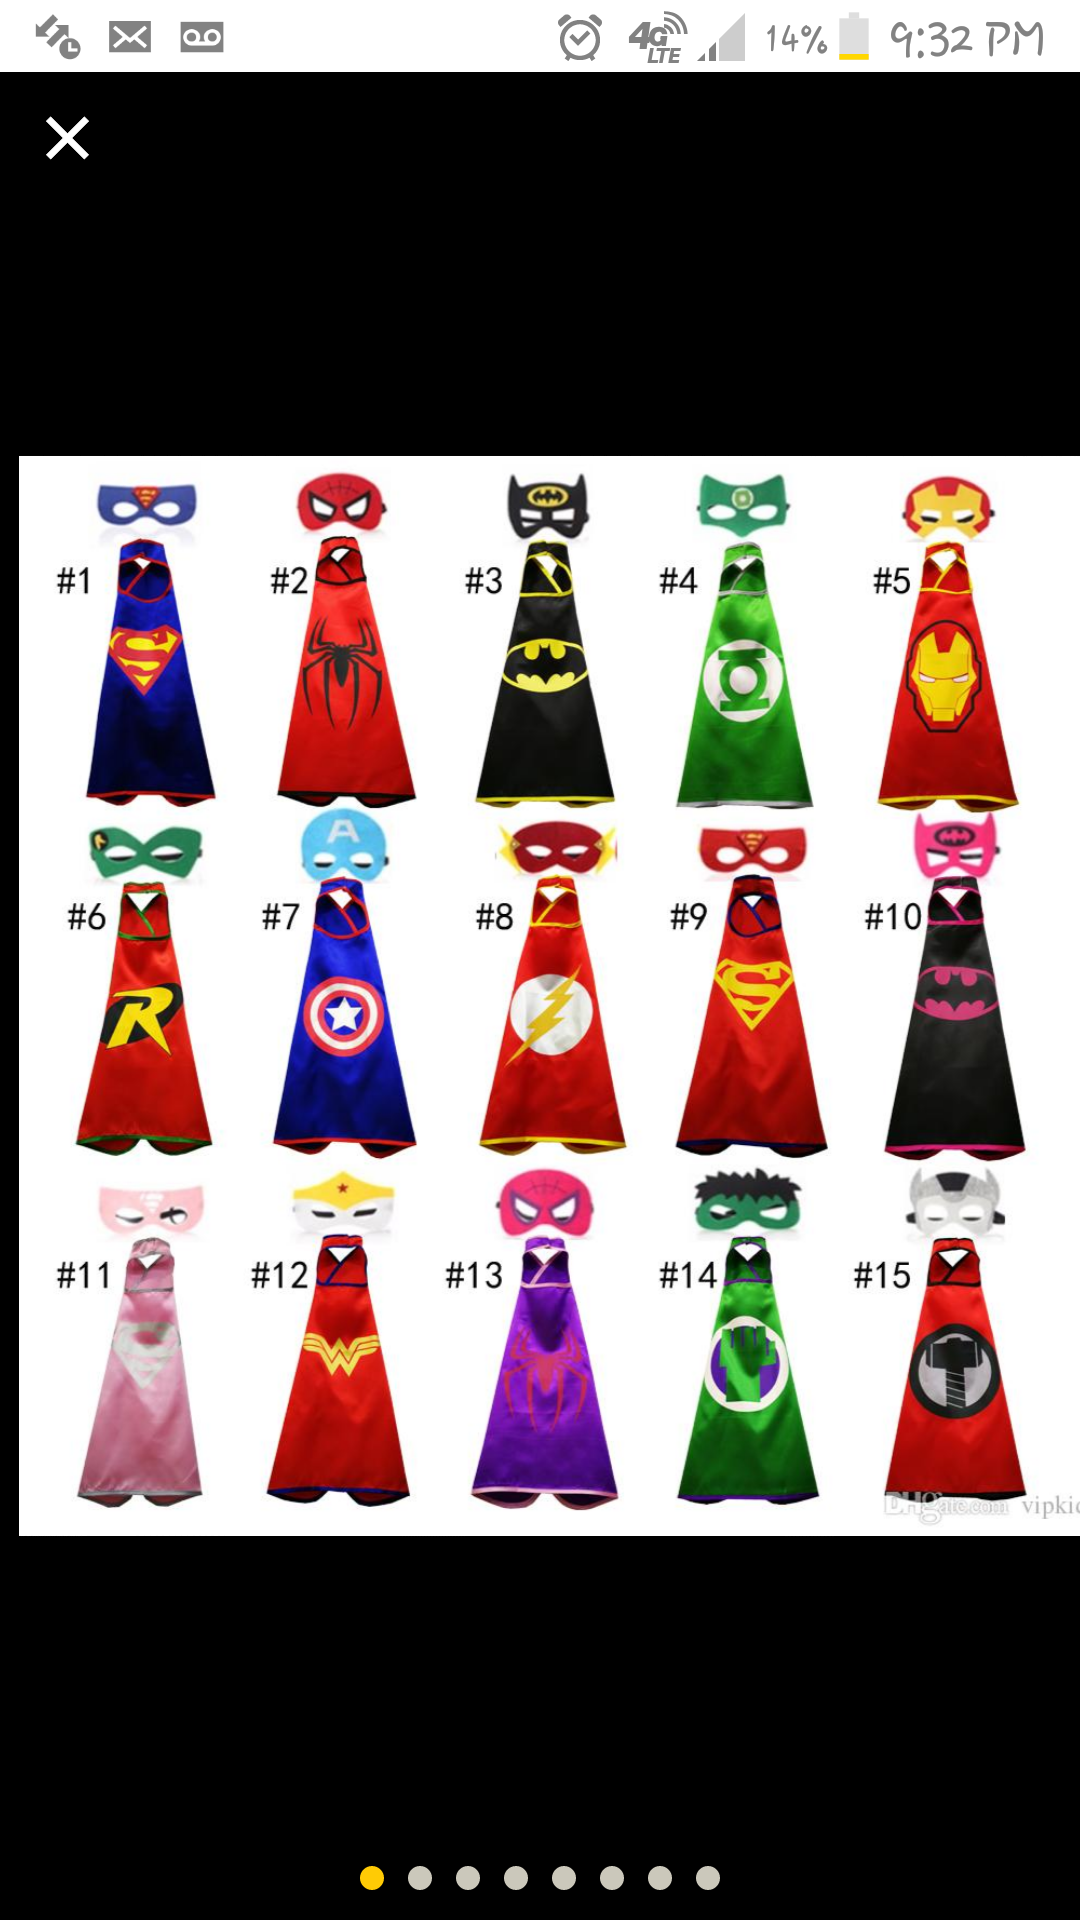 Super Hero Capes and masks